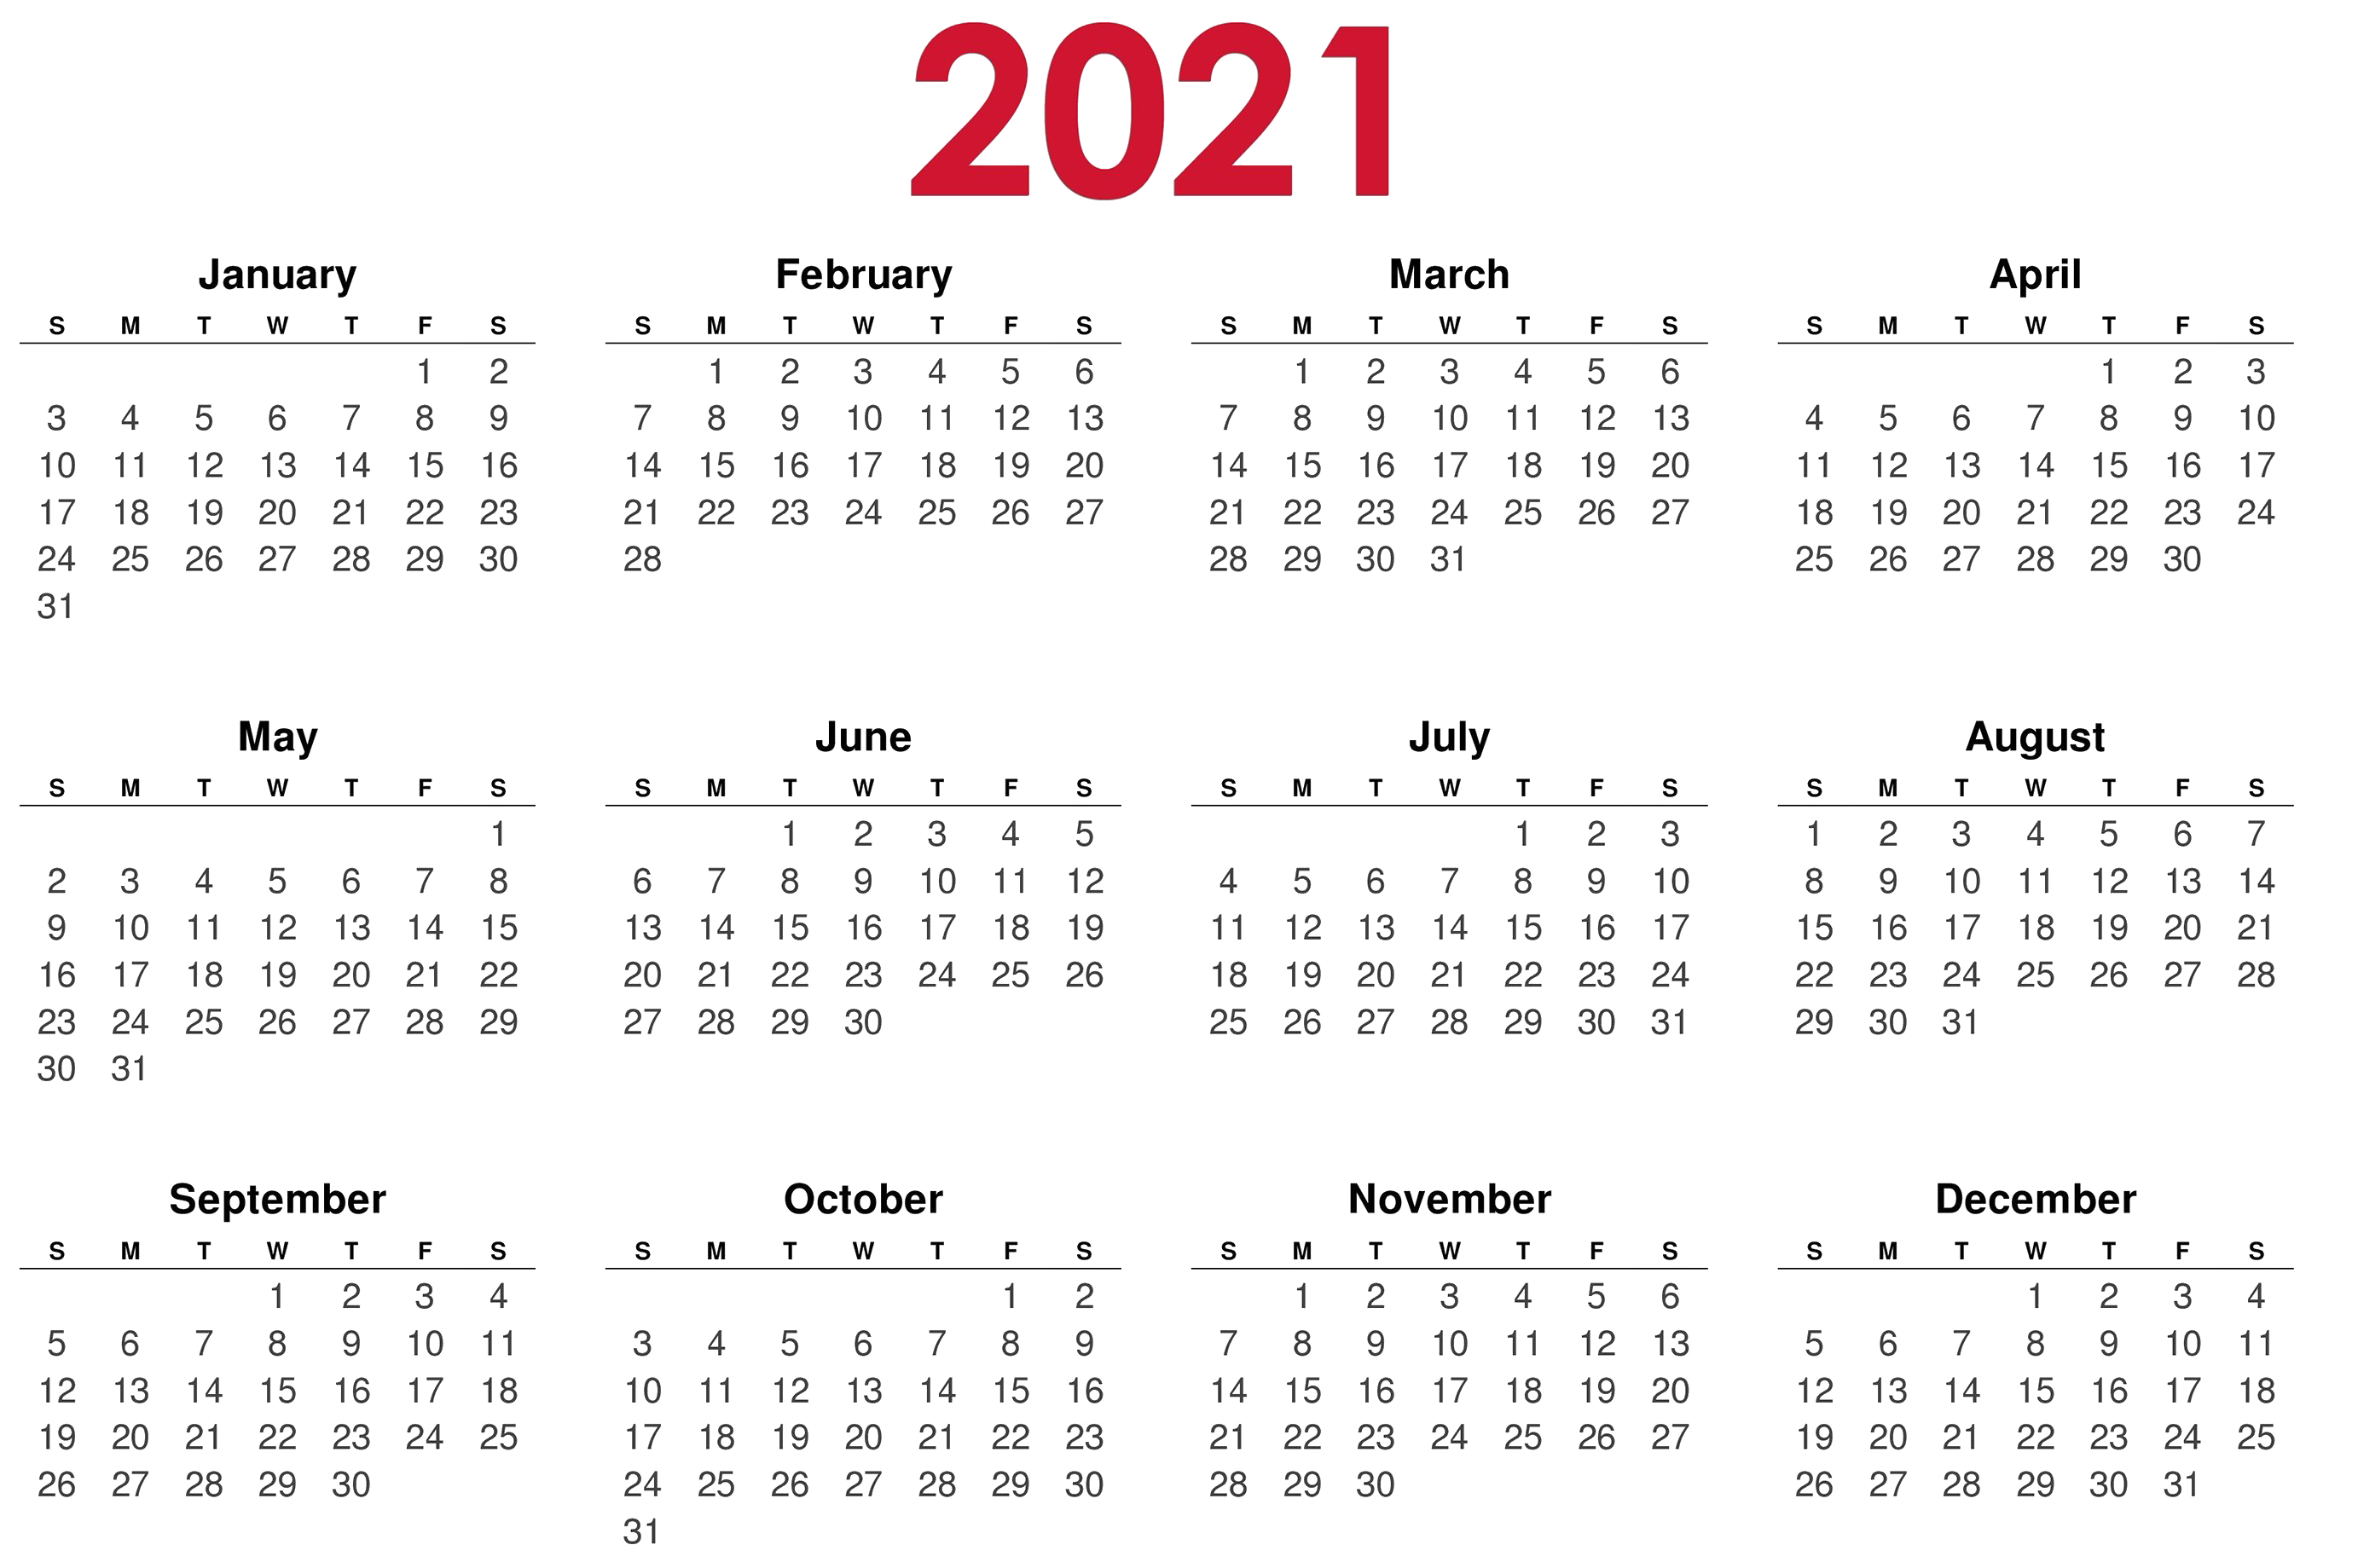 Hd Png 2021 Calendar Hd Images : 2021 calendar in png hd image format ...